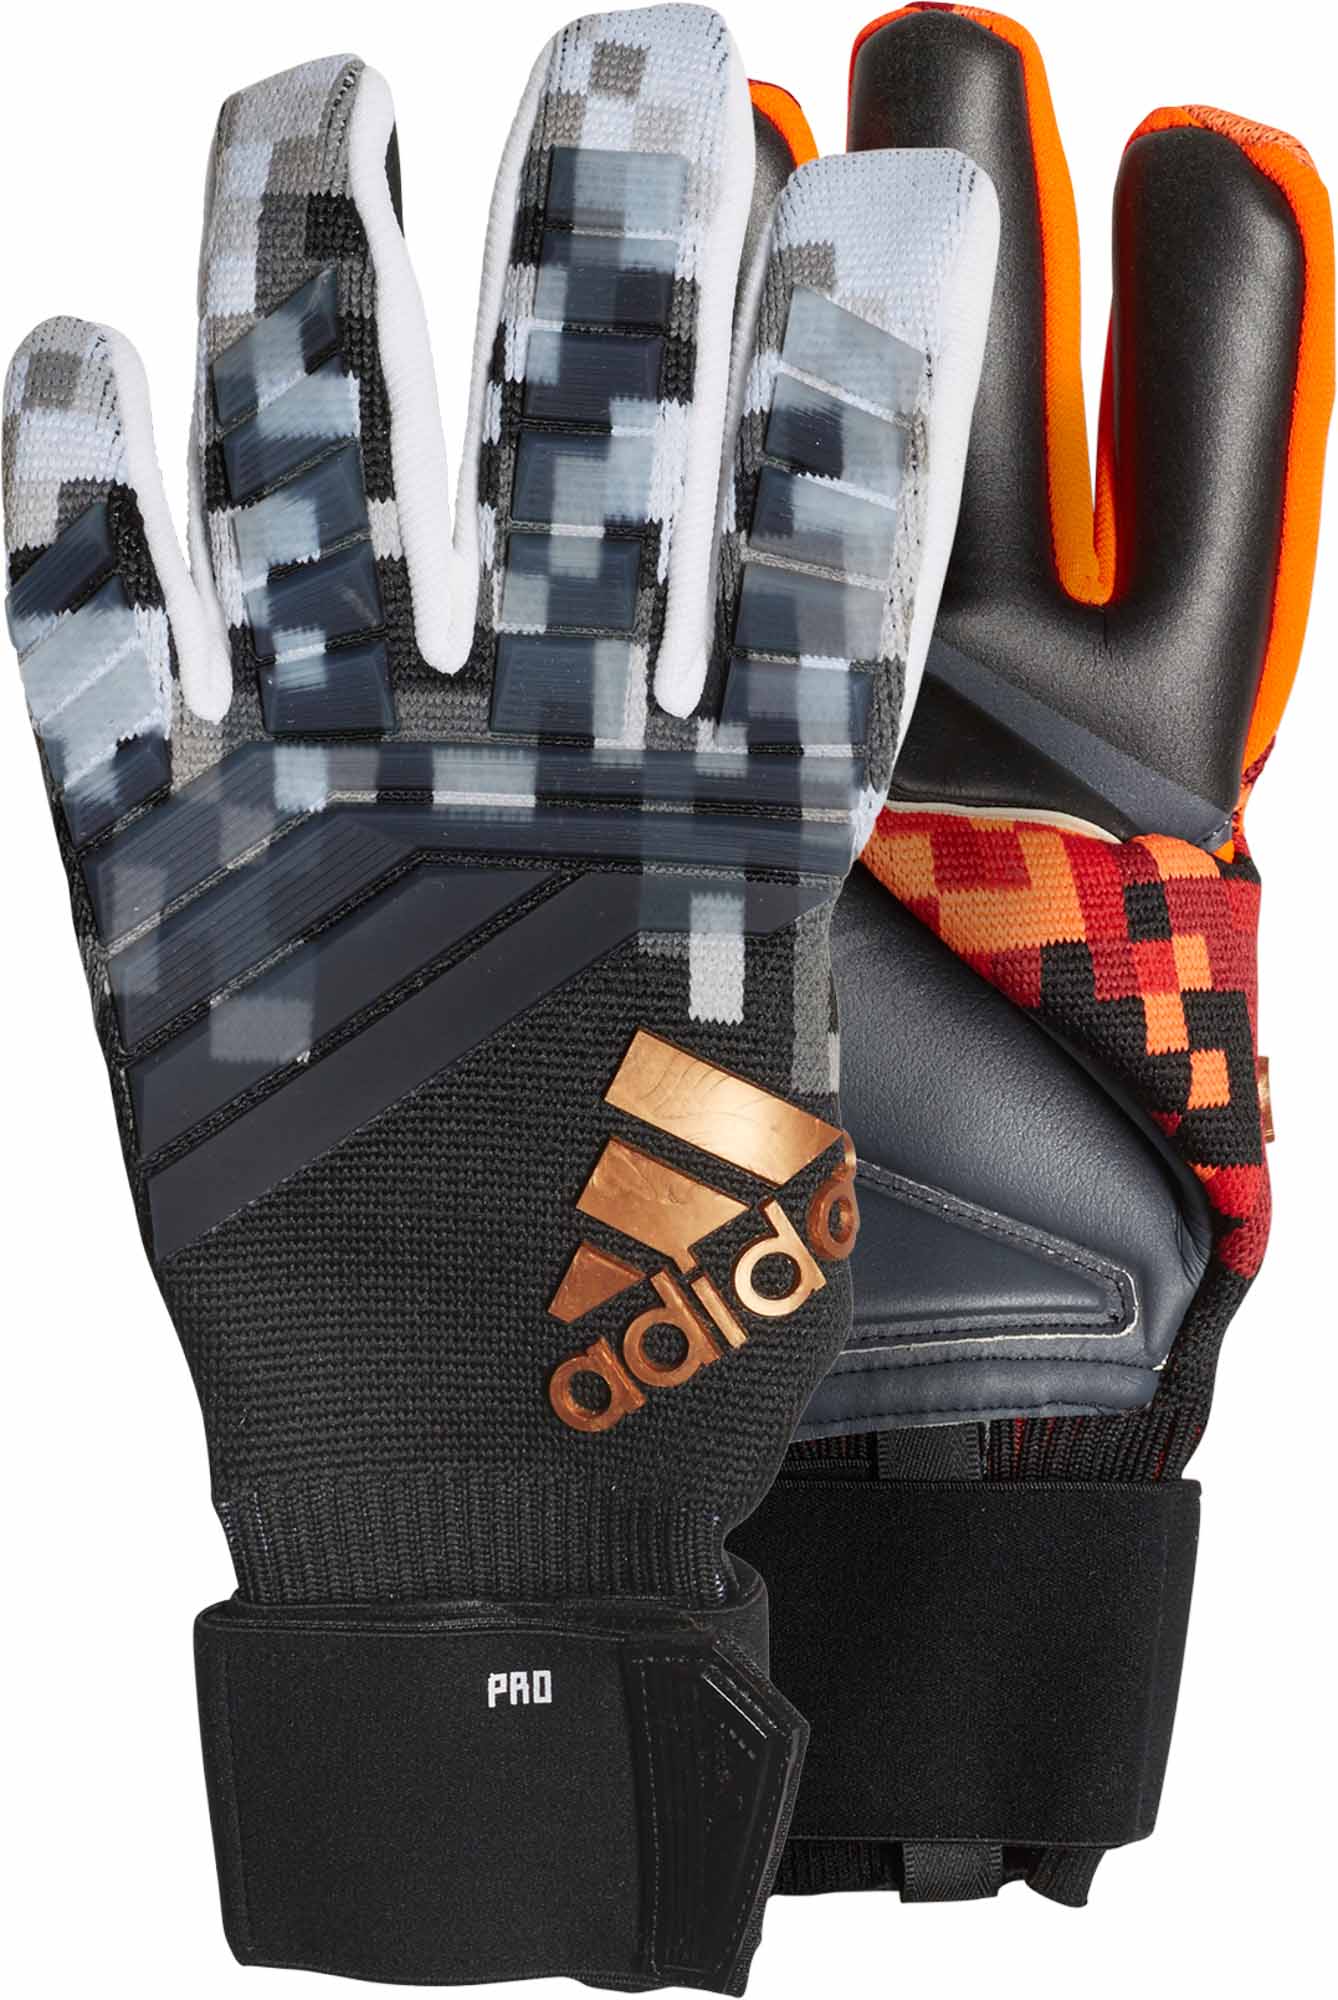 adidas telstar goalkeeper gloves